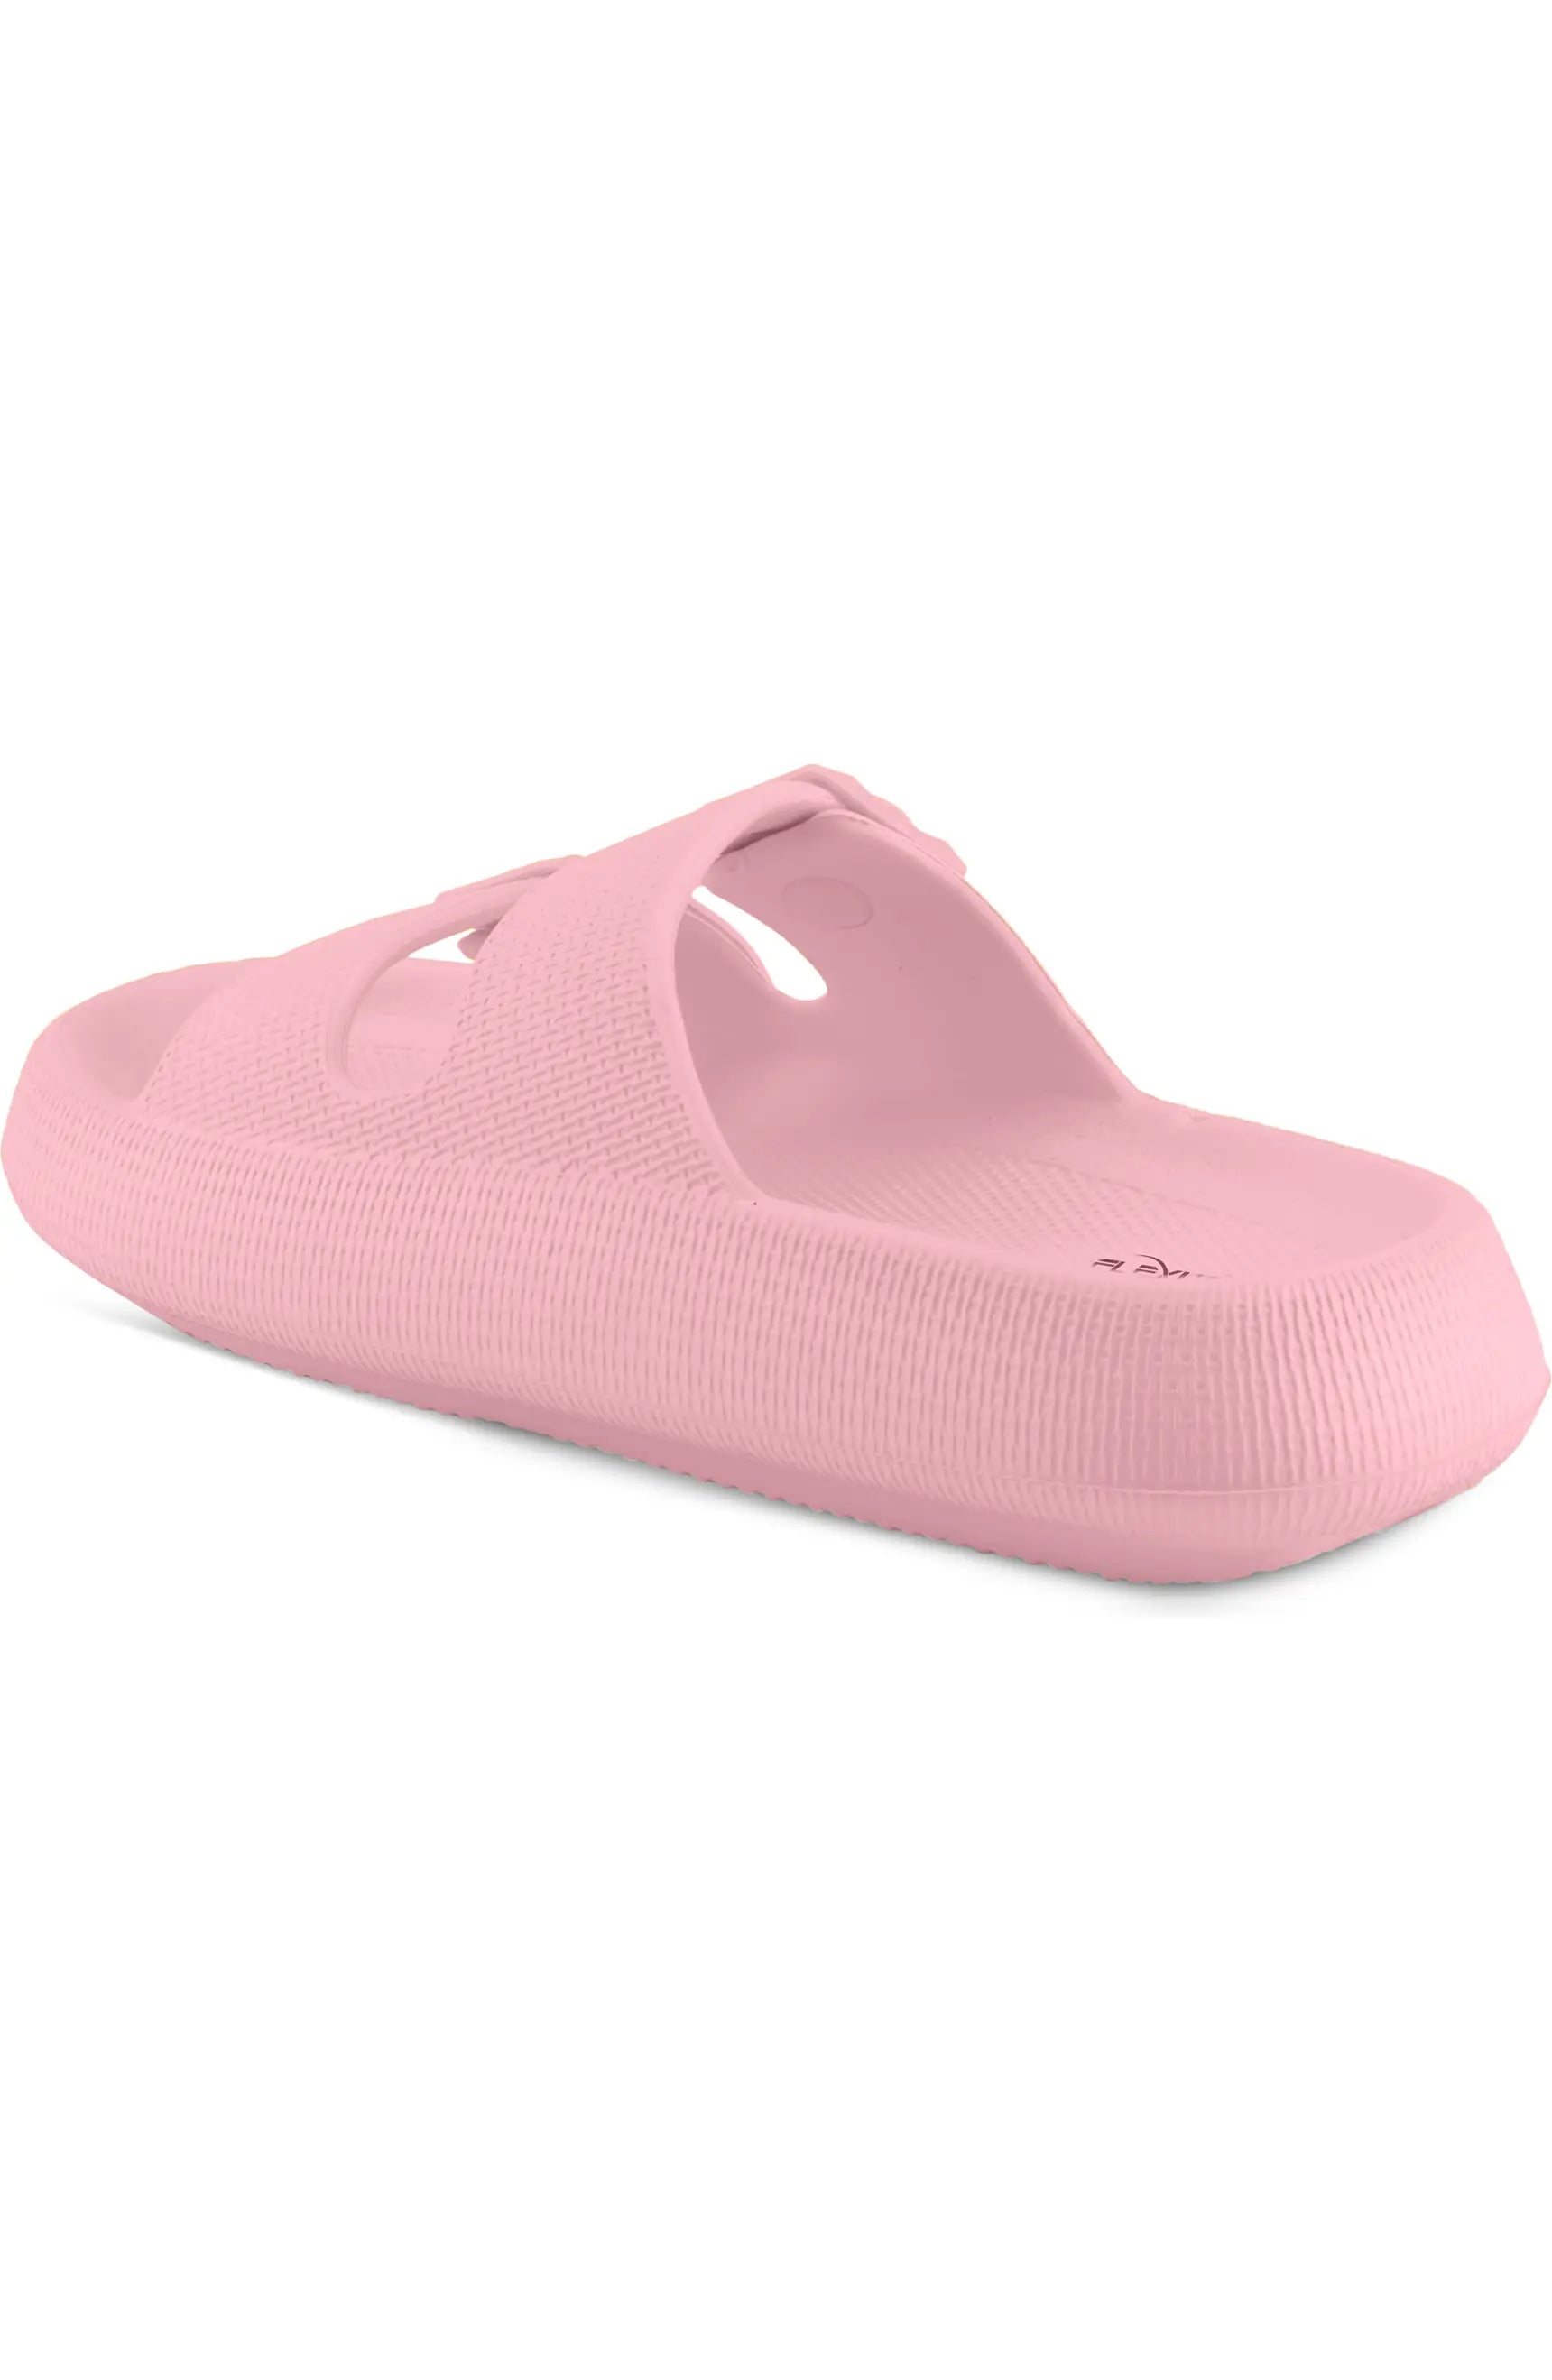 SpringStep Bubbles Waterproof Slide Sandal (Women) Light Pink - All Mixed Up 